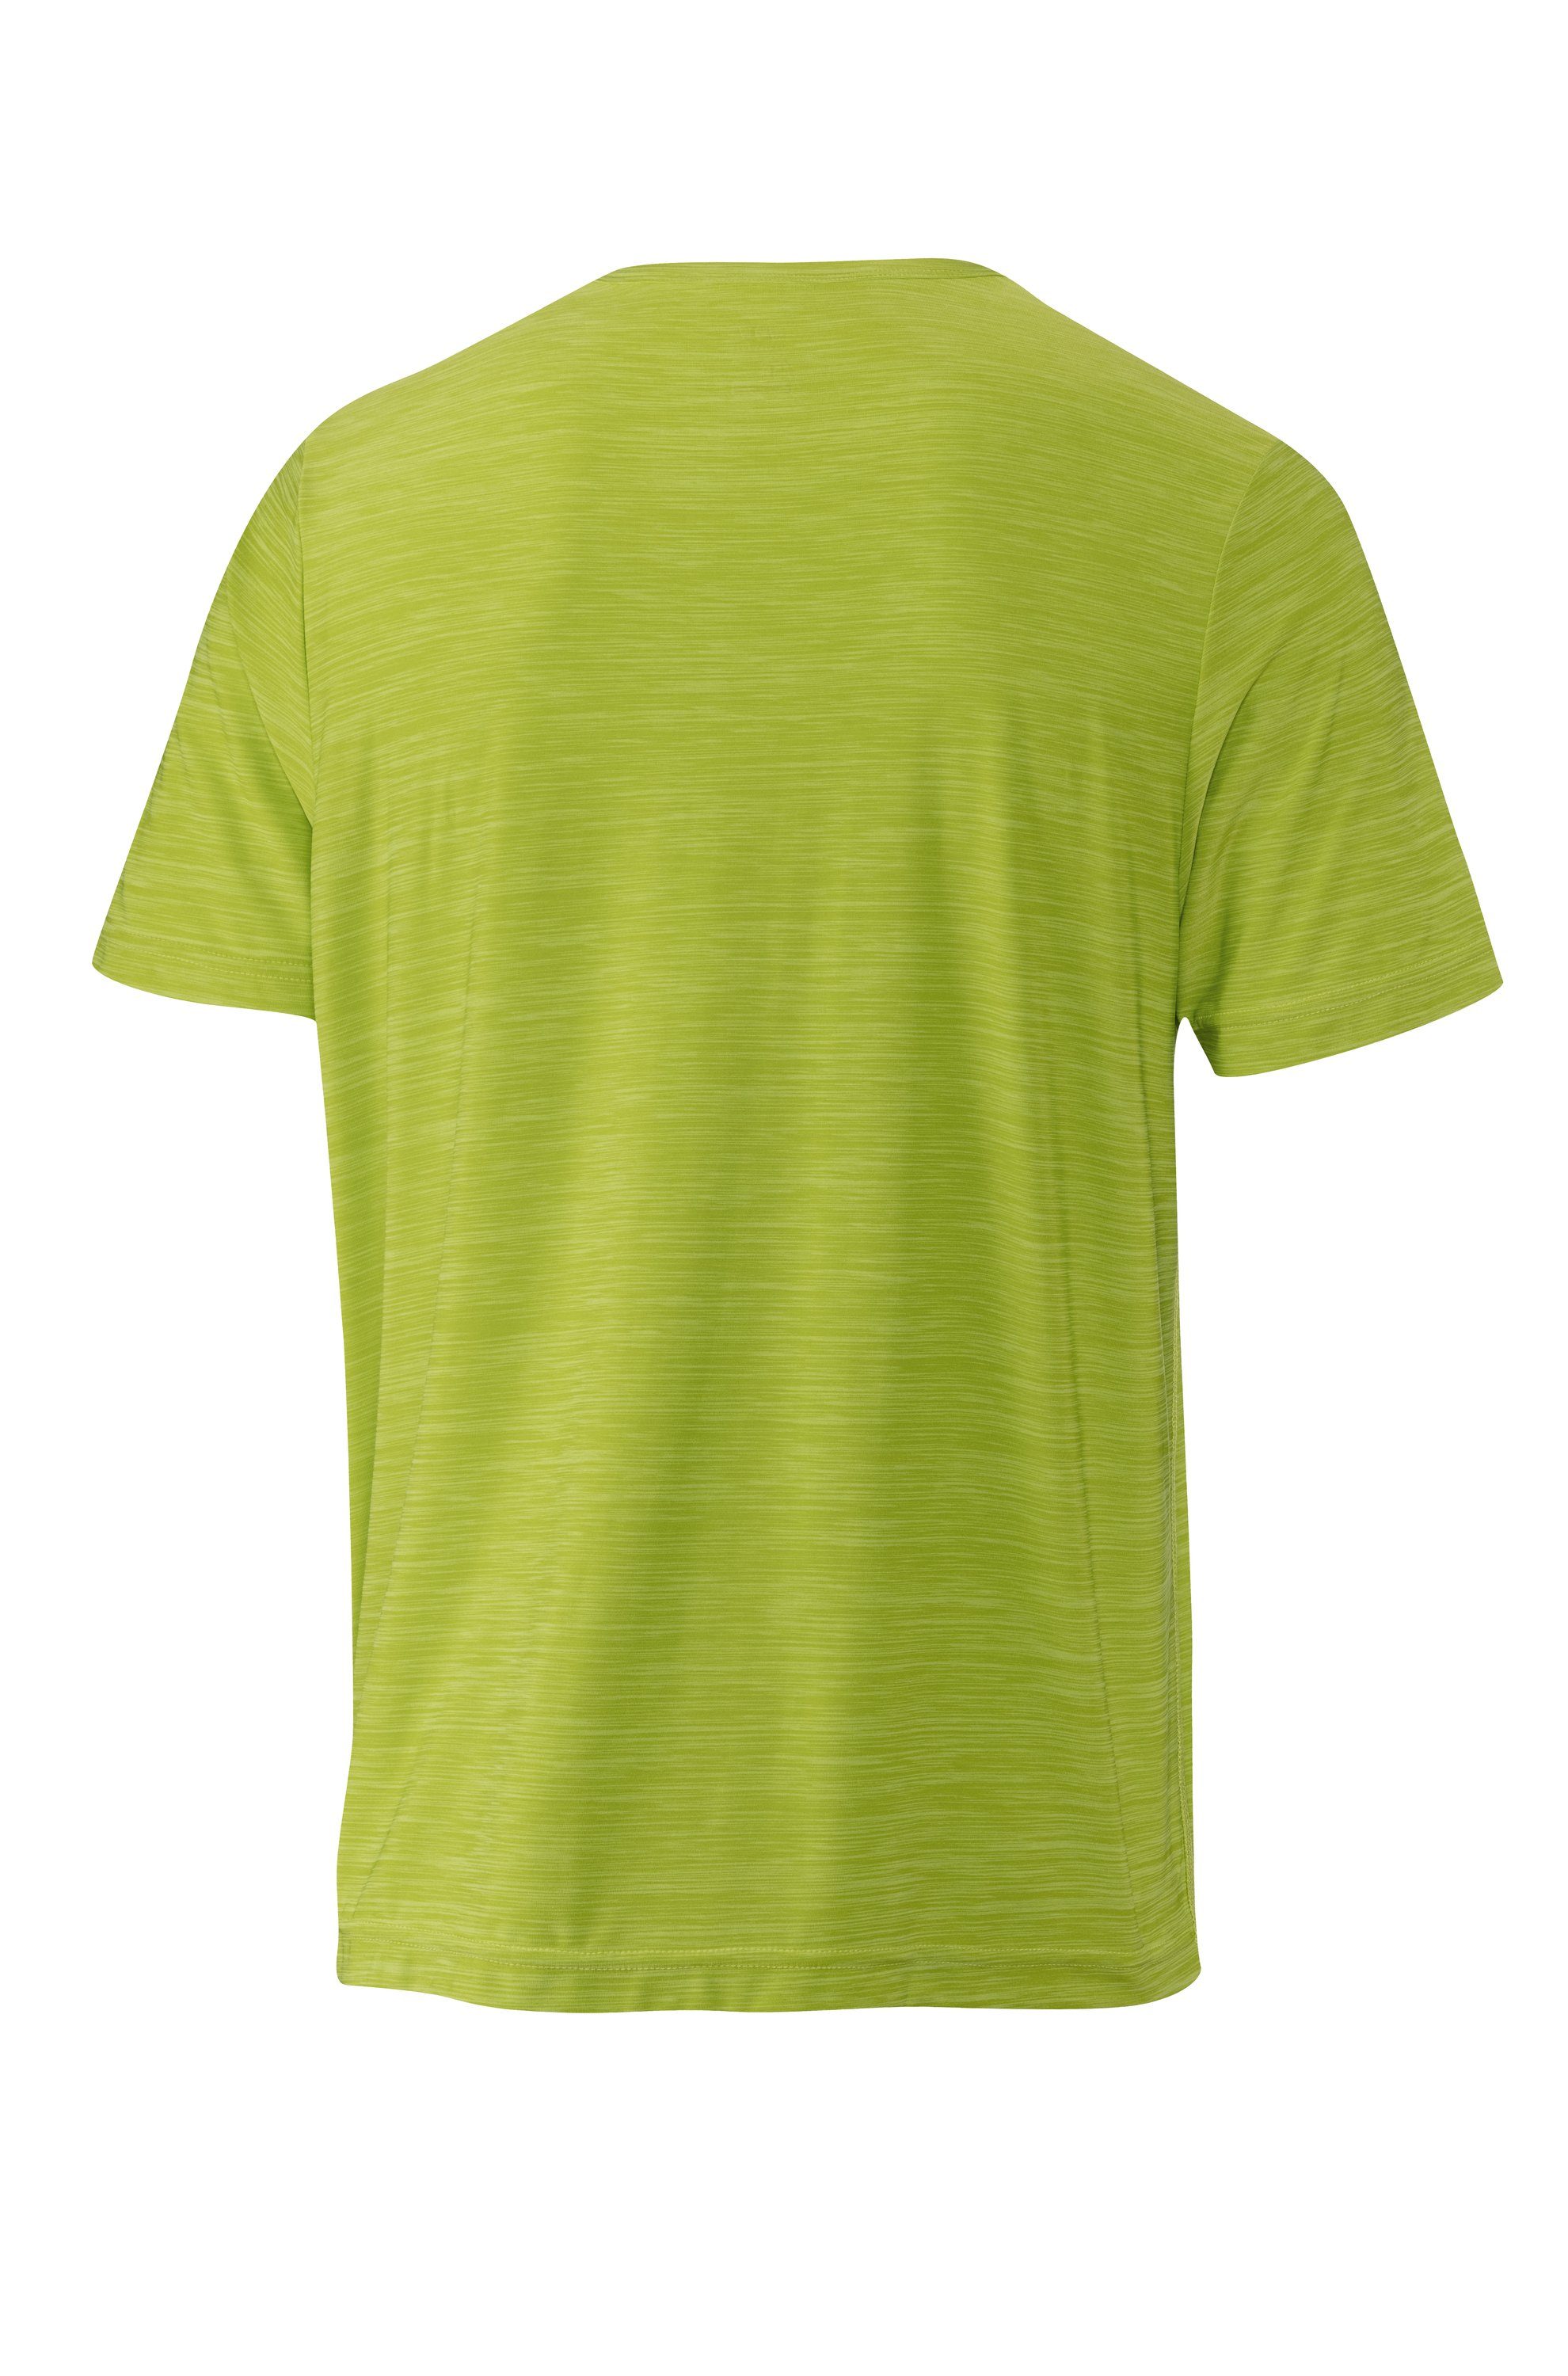 JOY & FUN Joy Sportswear lime T-Shirt acid T-Shirt VITUS melange